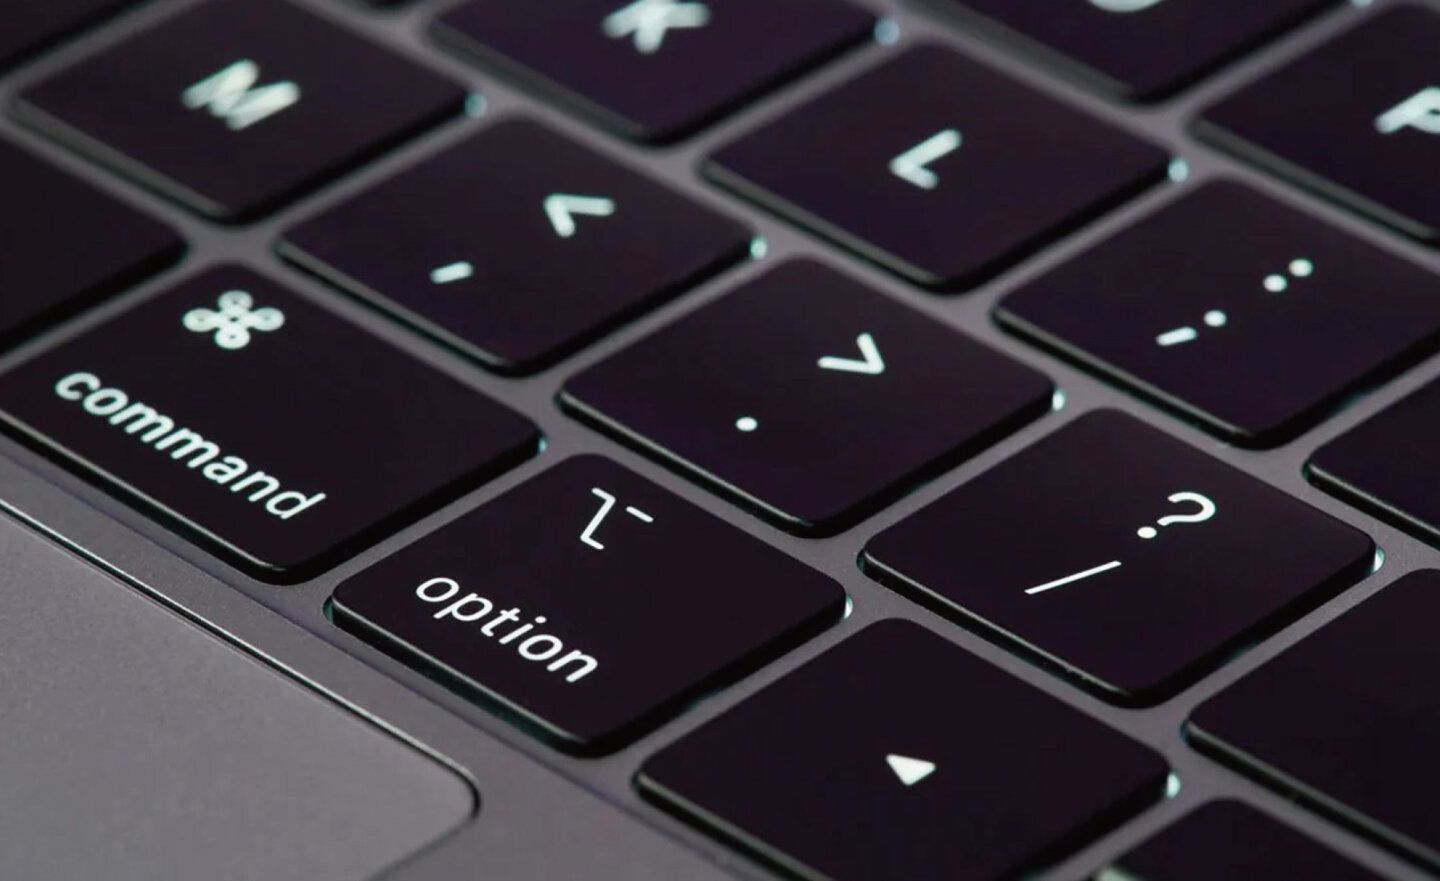 Apple MacBook 使用者注意！蝶式鍵盤免費維修計畫即將結束